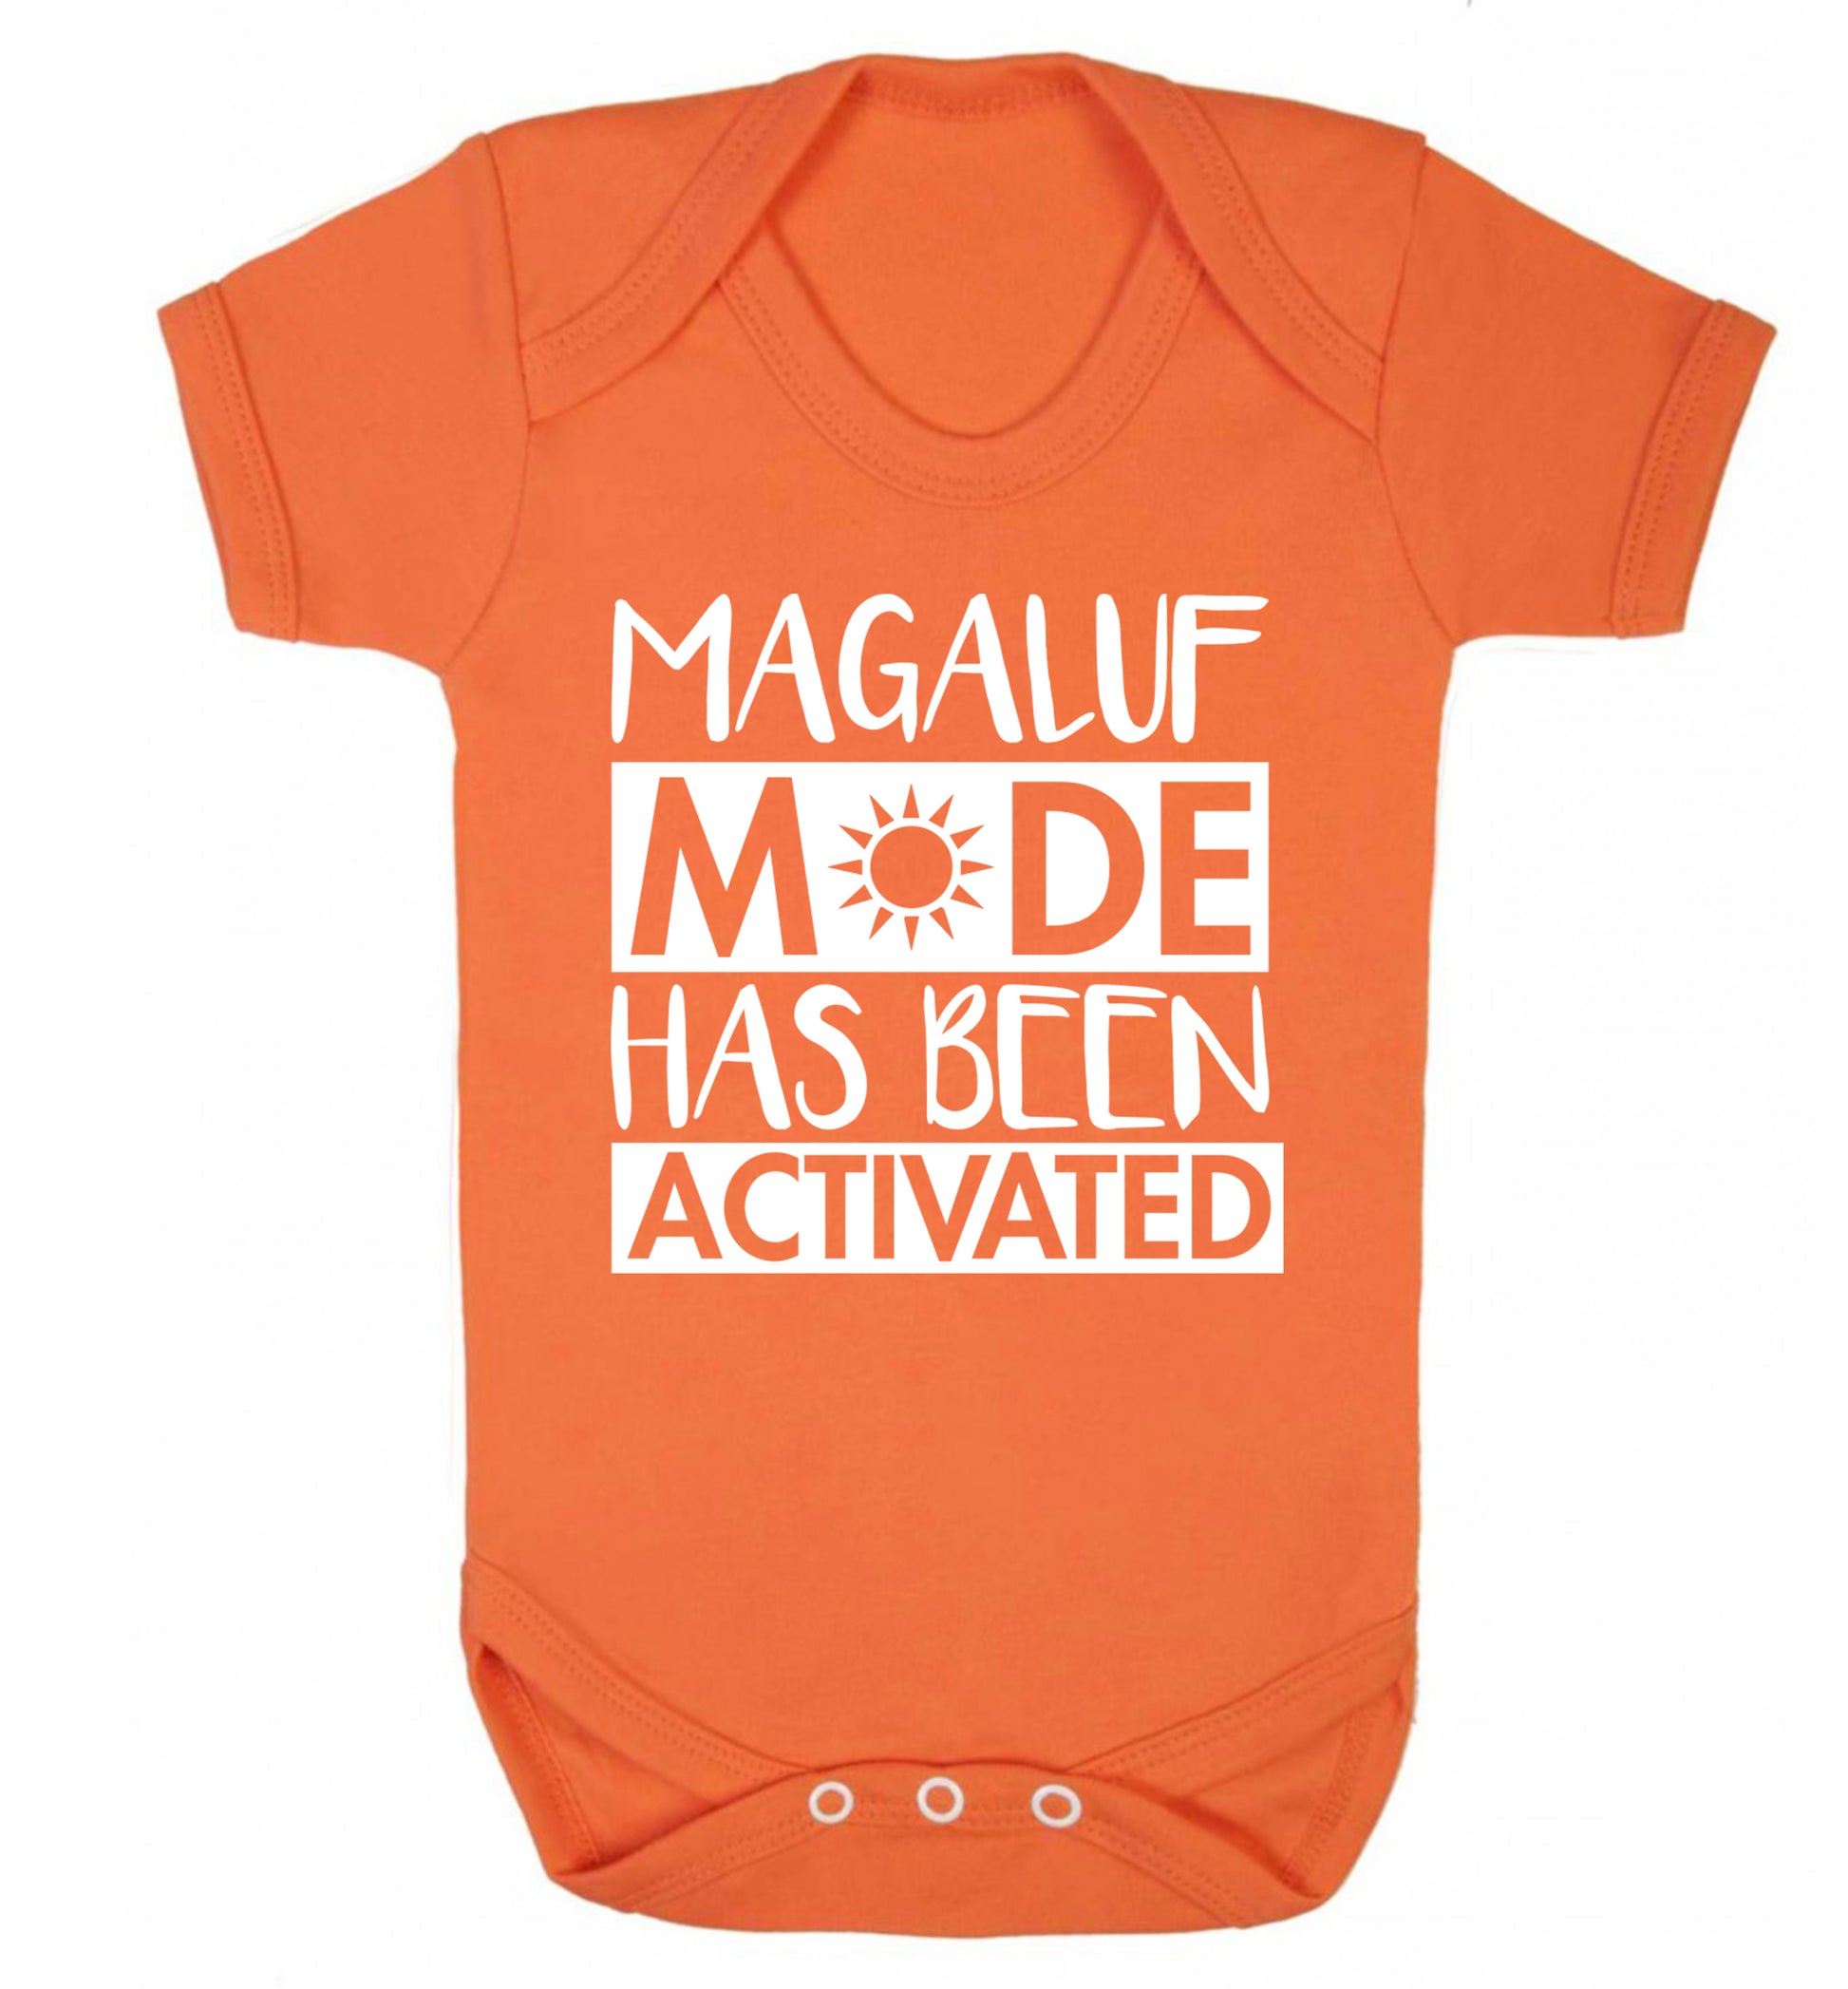 Magaluf mode has been activated Baby Vest orange 18-24 months